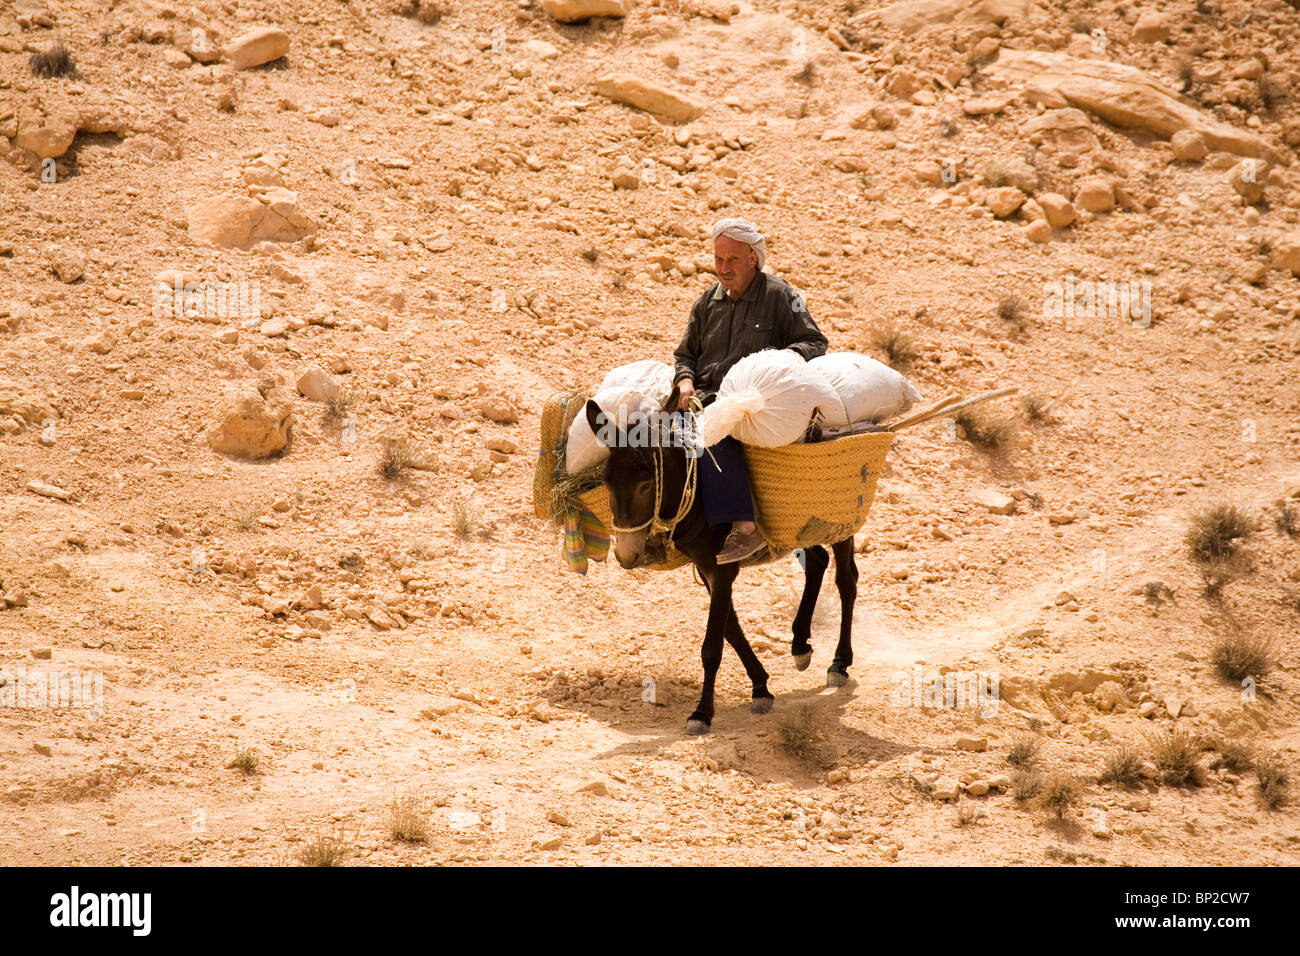 An Arab man rides a pack laden donkey on an arid hillside in Tunisia. Stock Photo